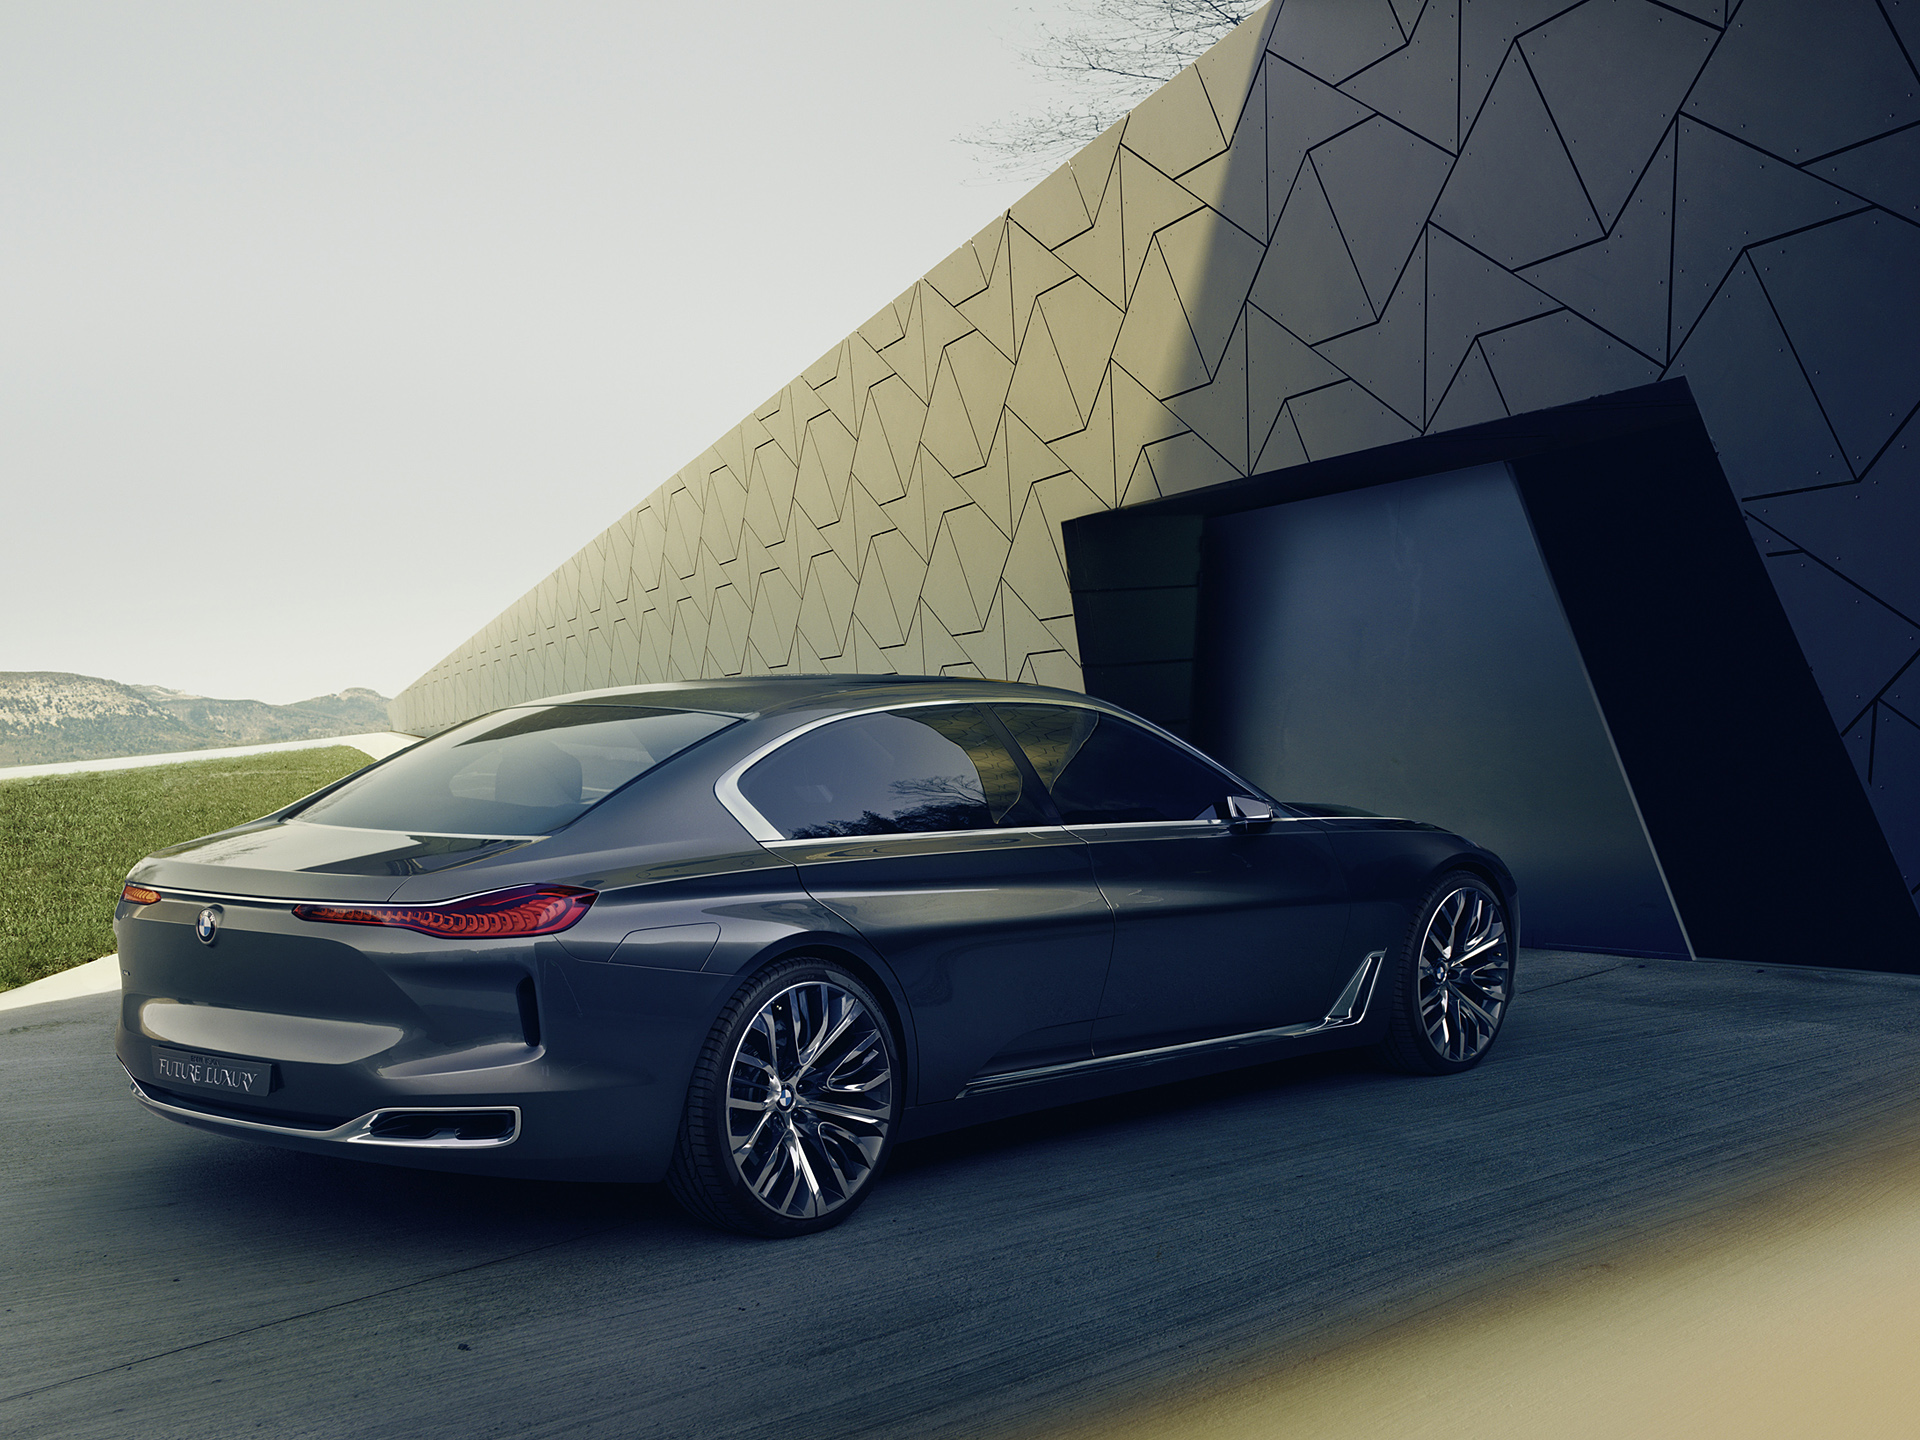  2014 BMW Vision Future Luxury Concept Wallpaper.